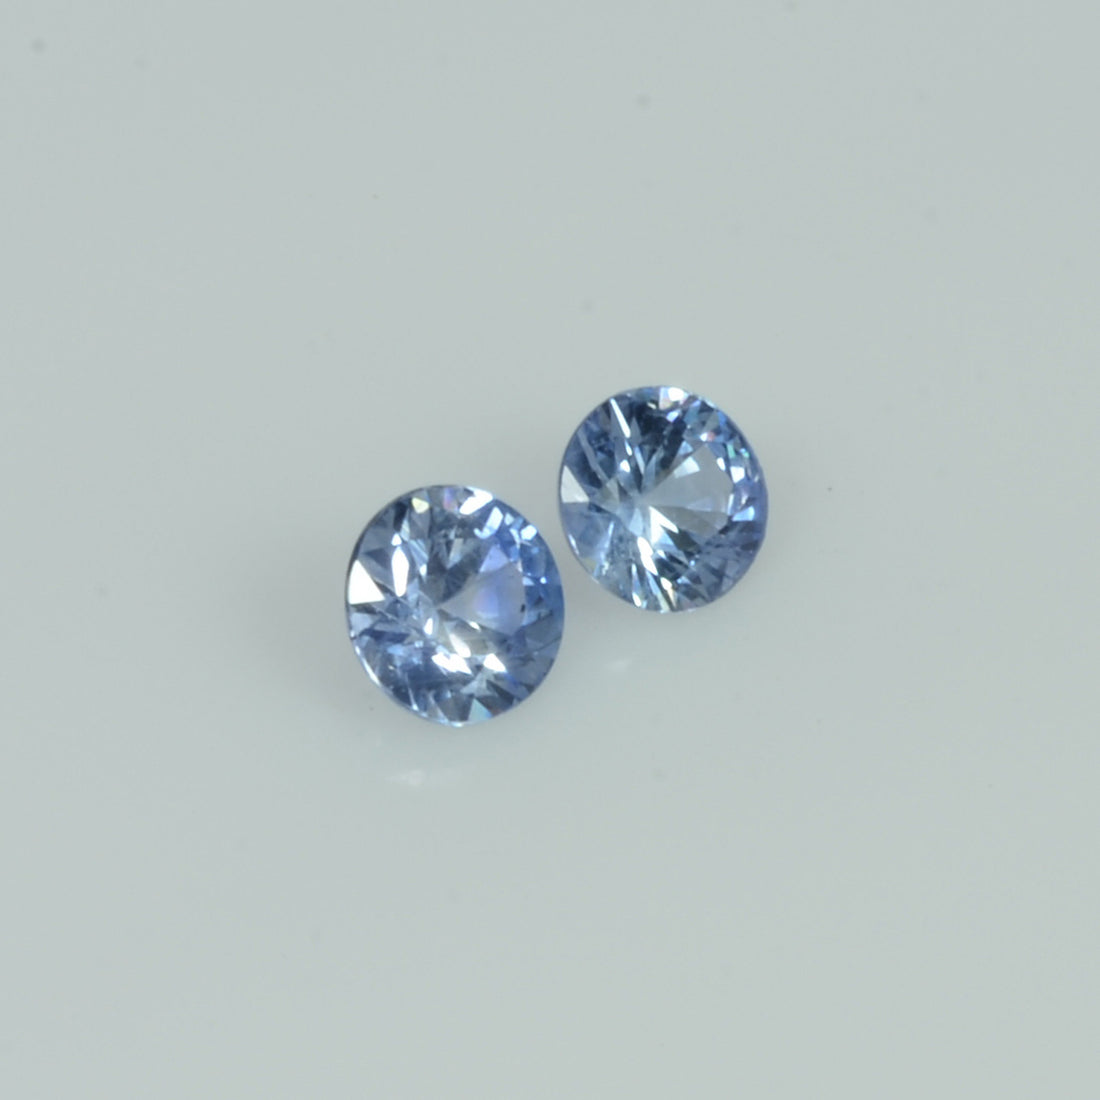 4.5 mm  Natural Blue Sapphire Loose Pair Gemstone Round Cut - Thai Gems Export Ltd.